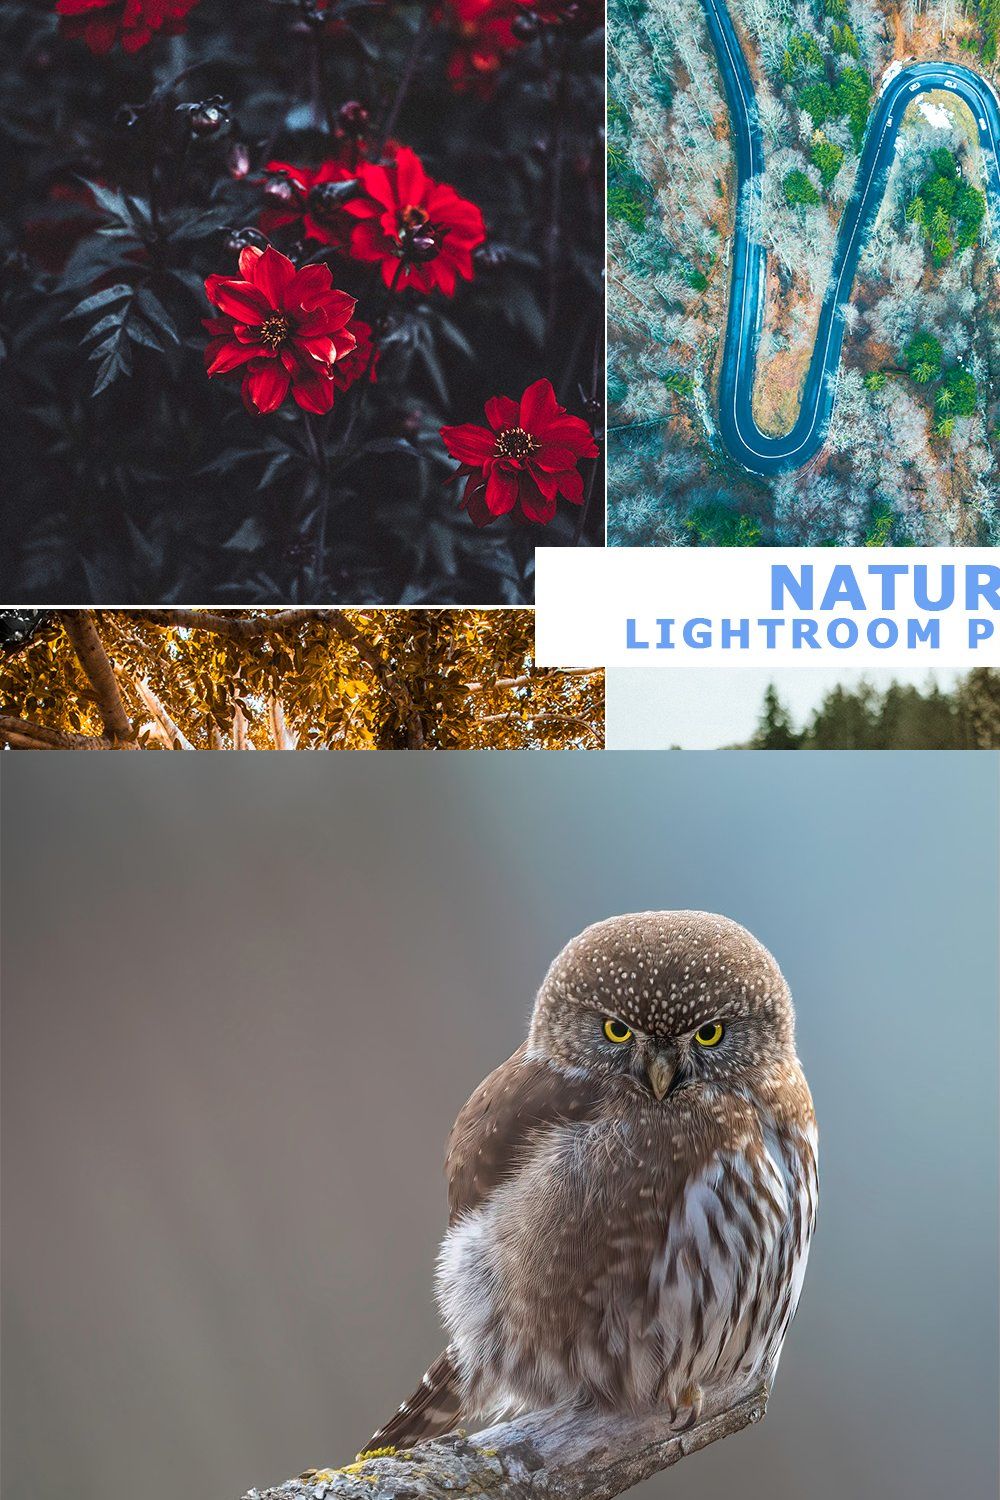 Nature Lightroom Presets pinterest preview image.